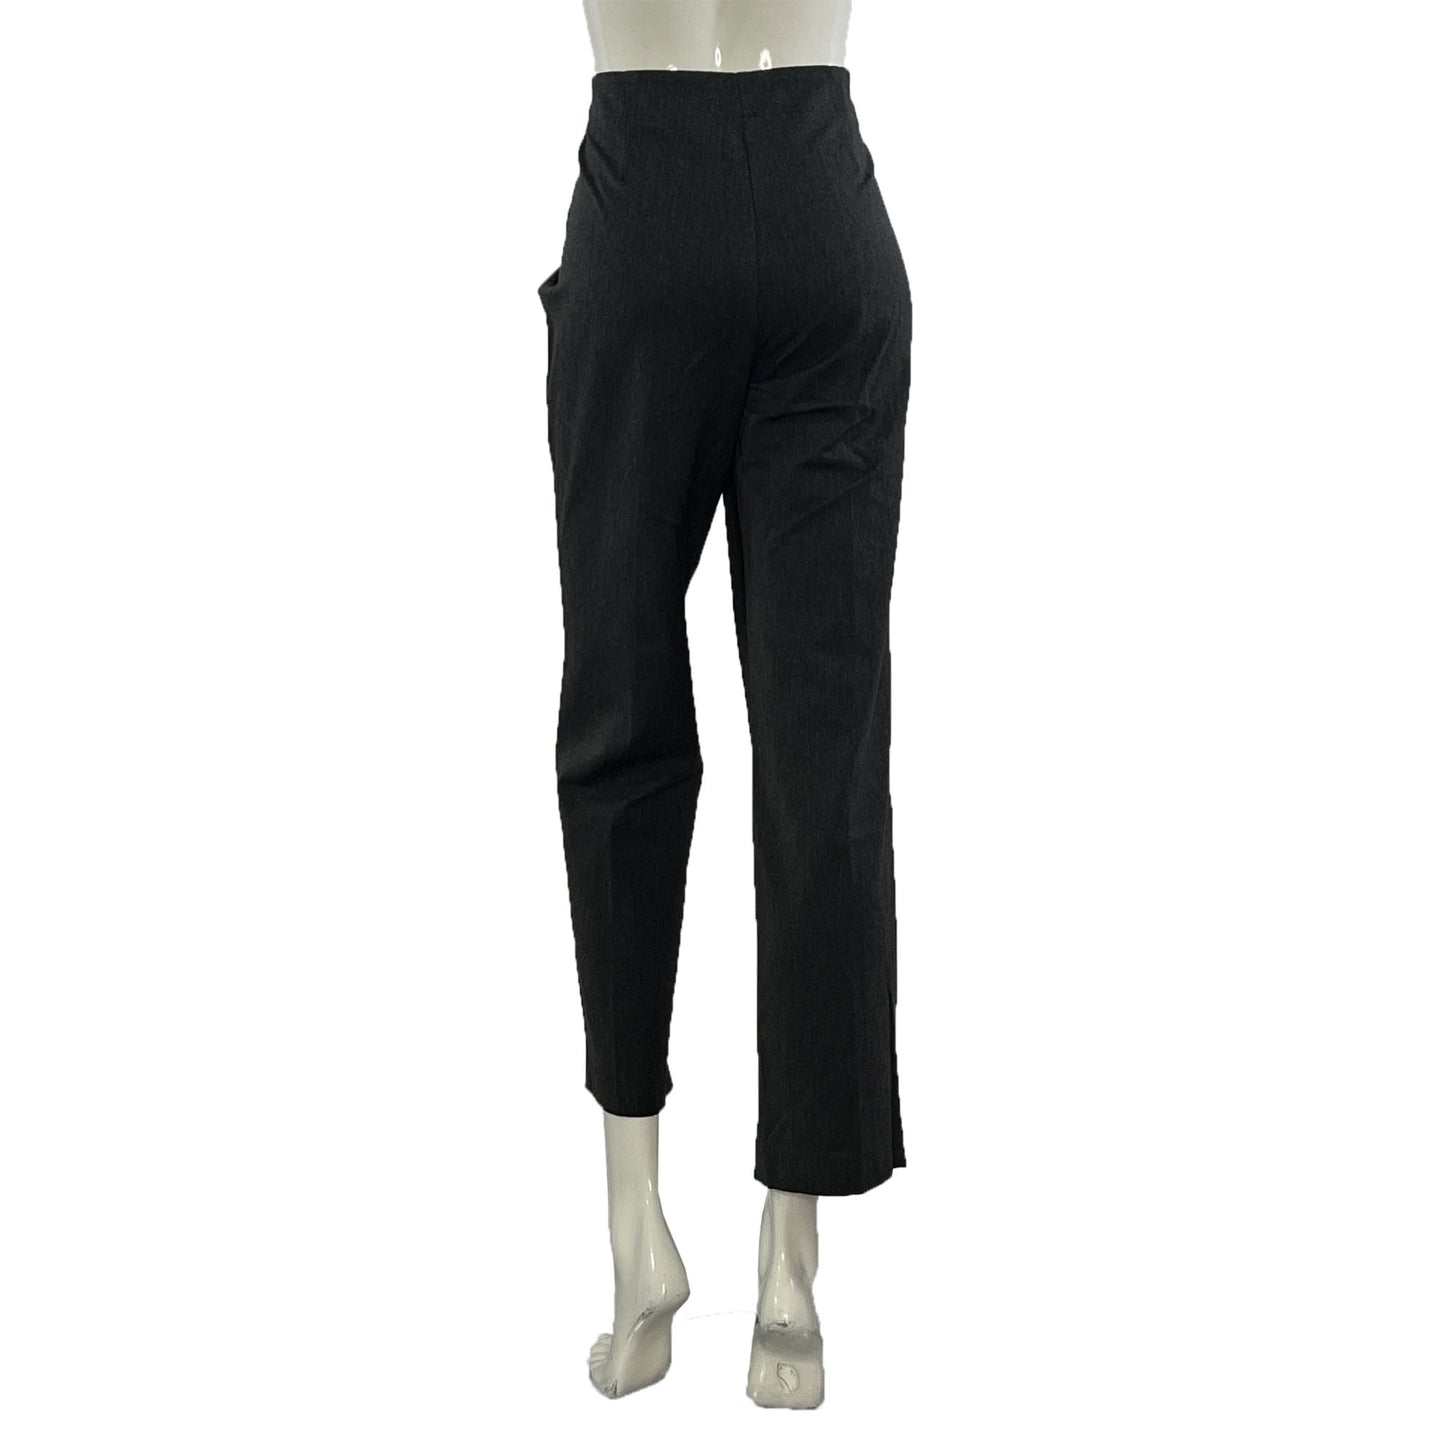 Talbots Dress Pants Side-Zipper Enclosure Gray Size 12 SKU 000416